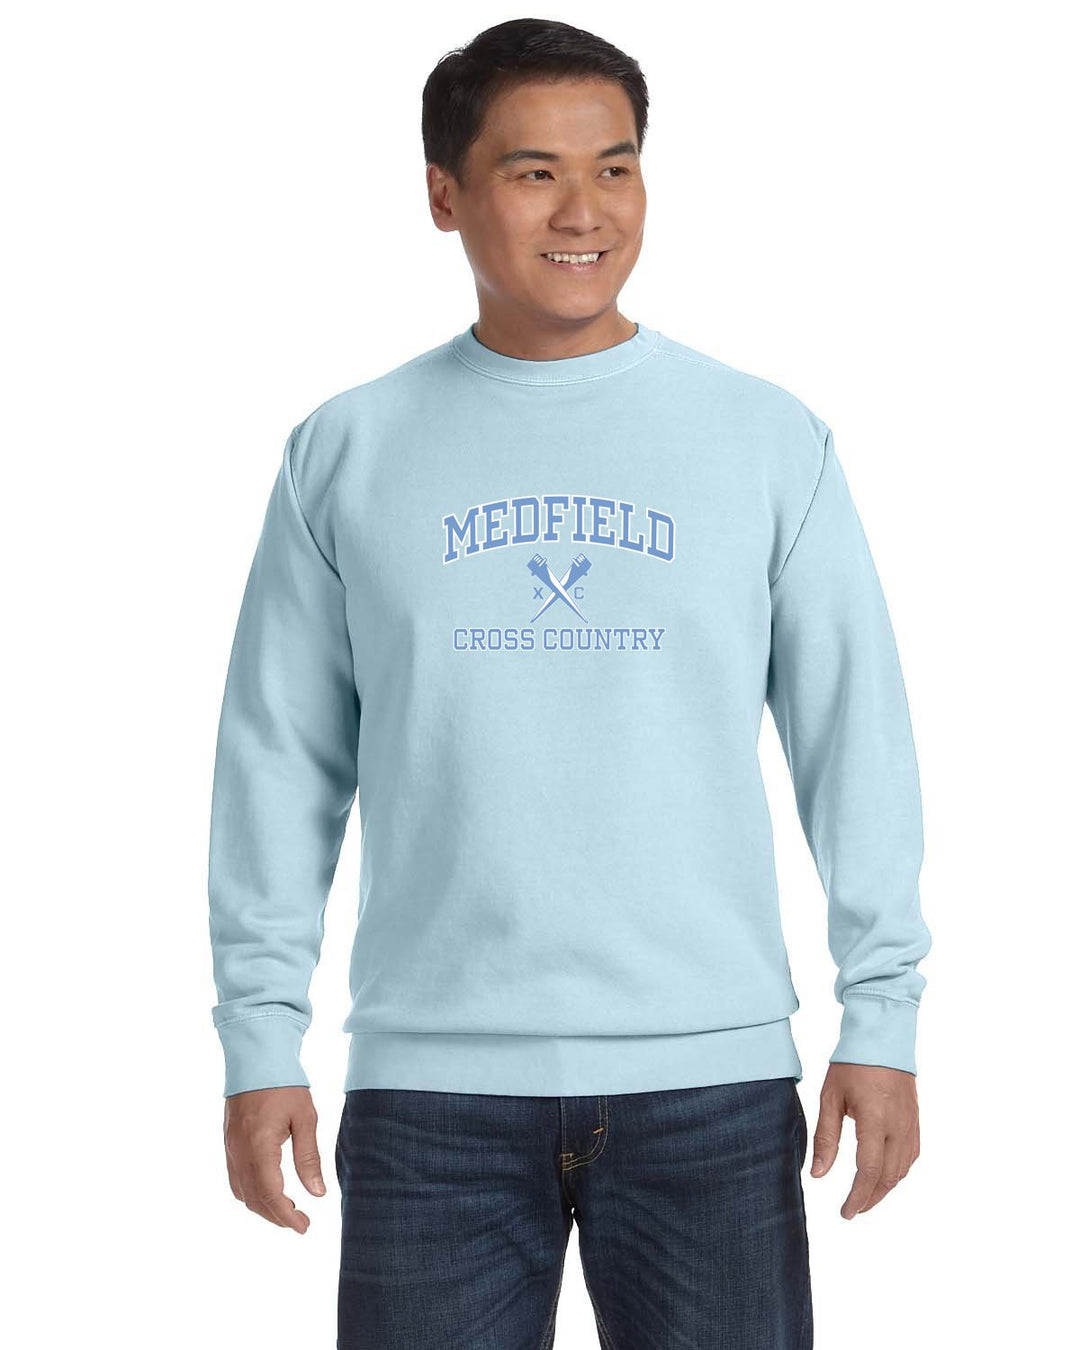 Medfield Cross Country Adult Crewneck Sweatshirt (1566)